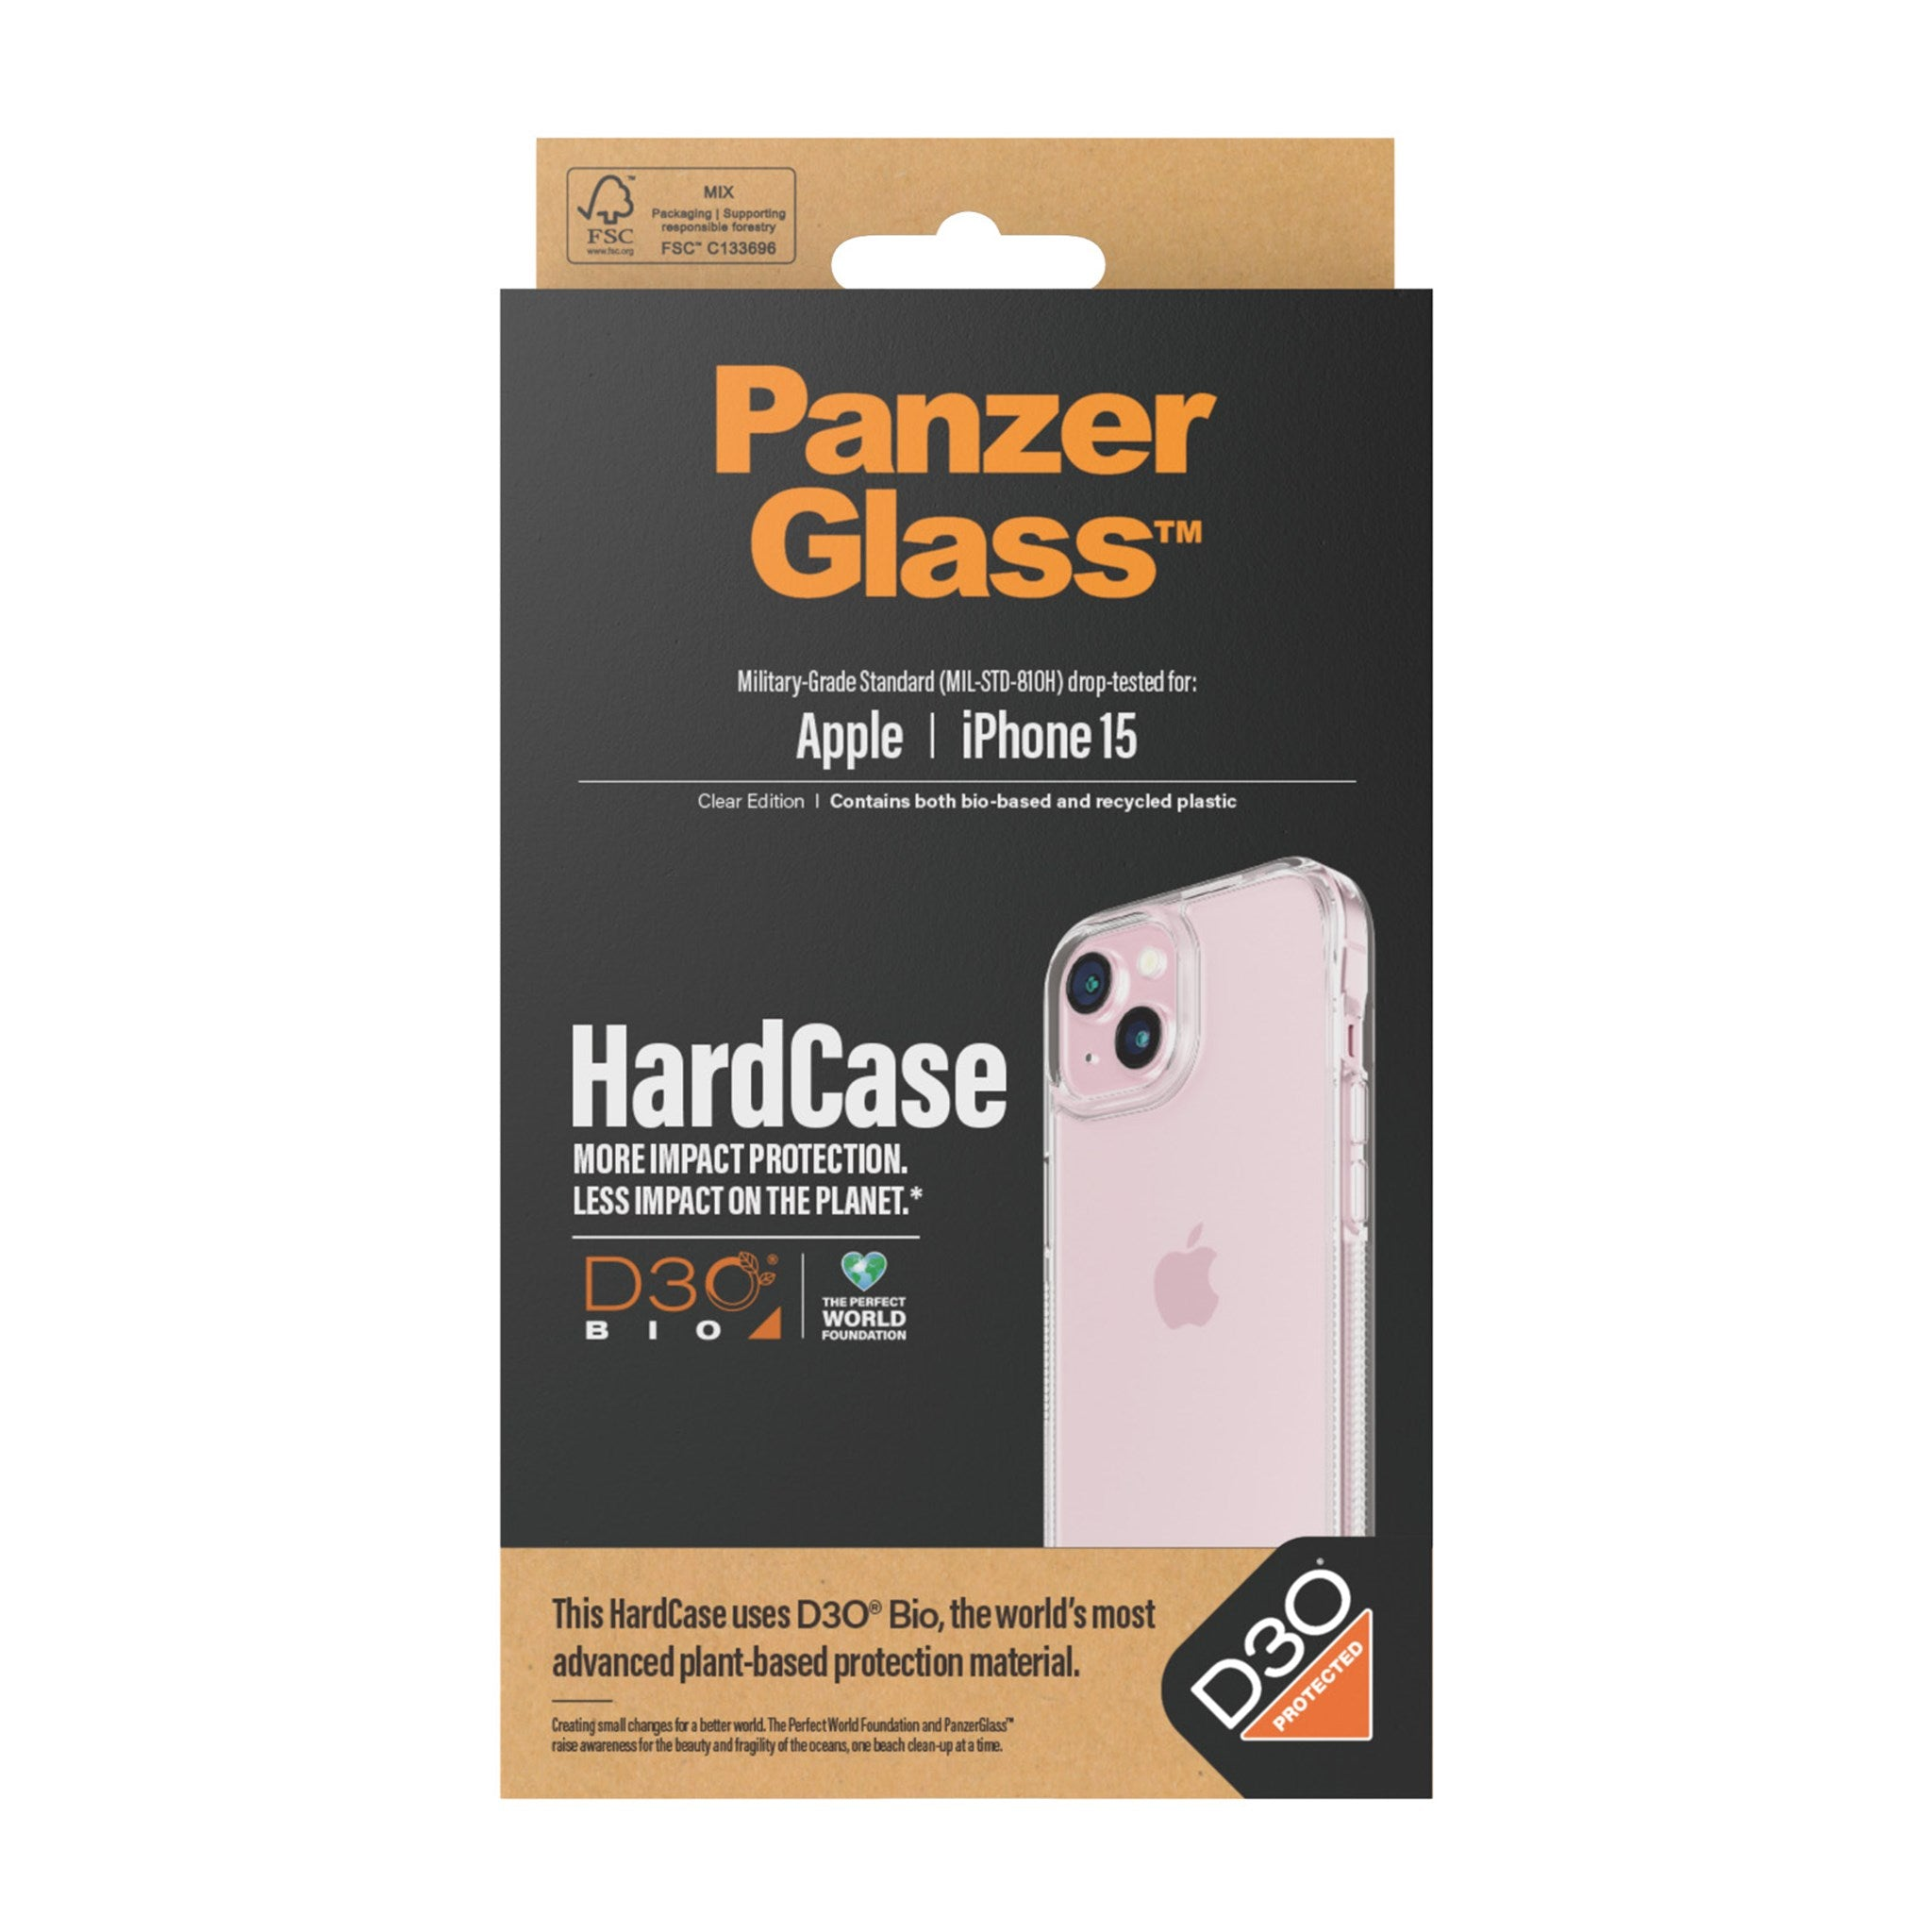 PANZERGLASS HardCase mit D3O Phone 15) iPhone Apple Case(für